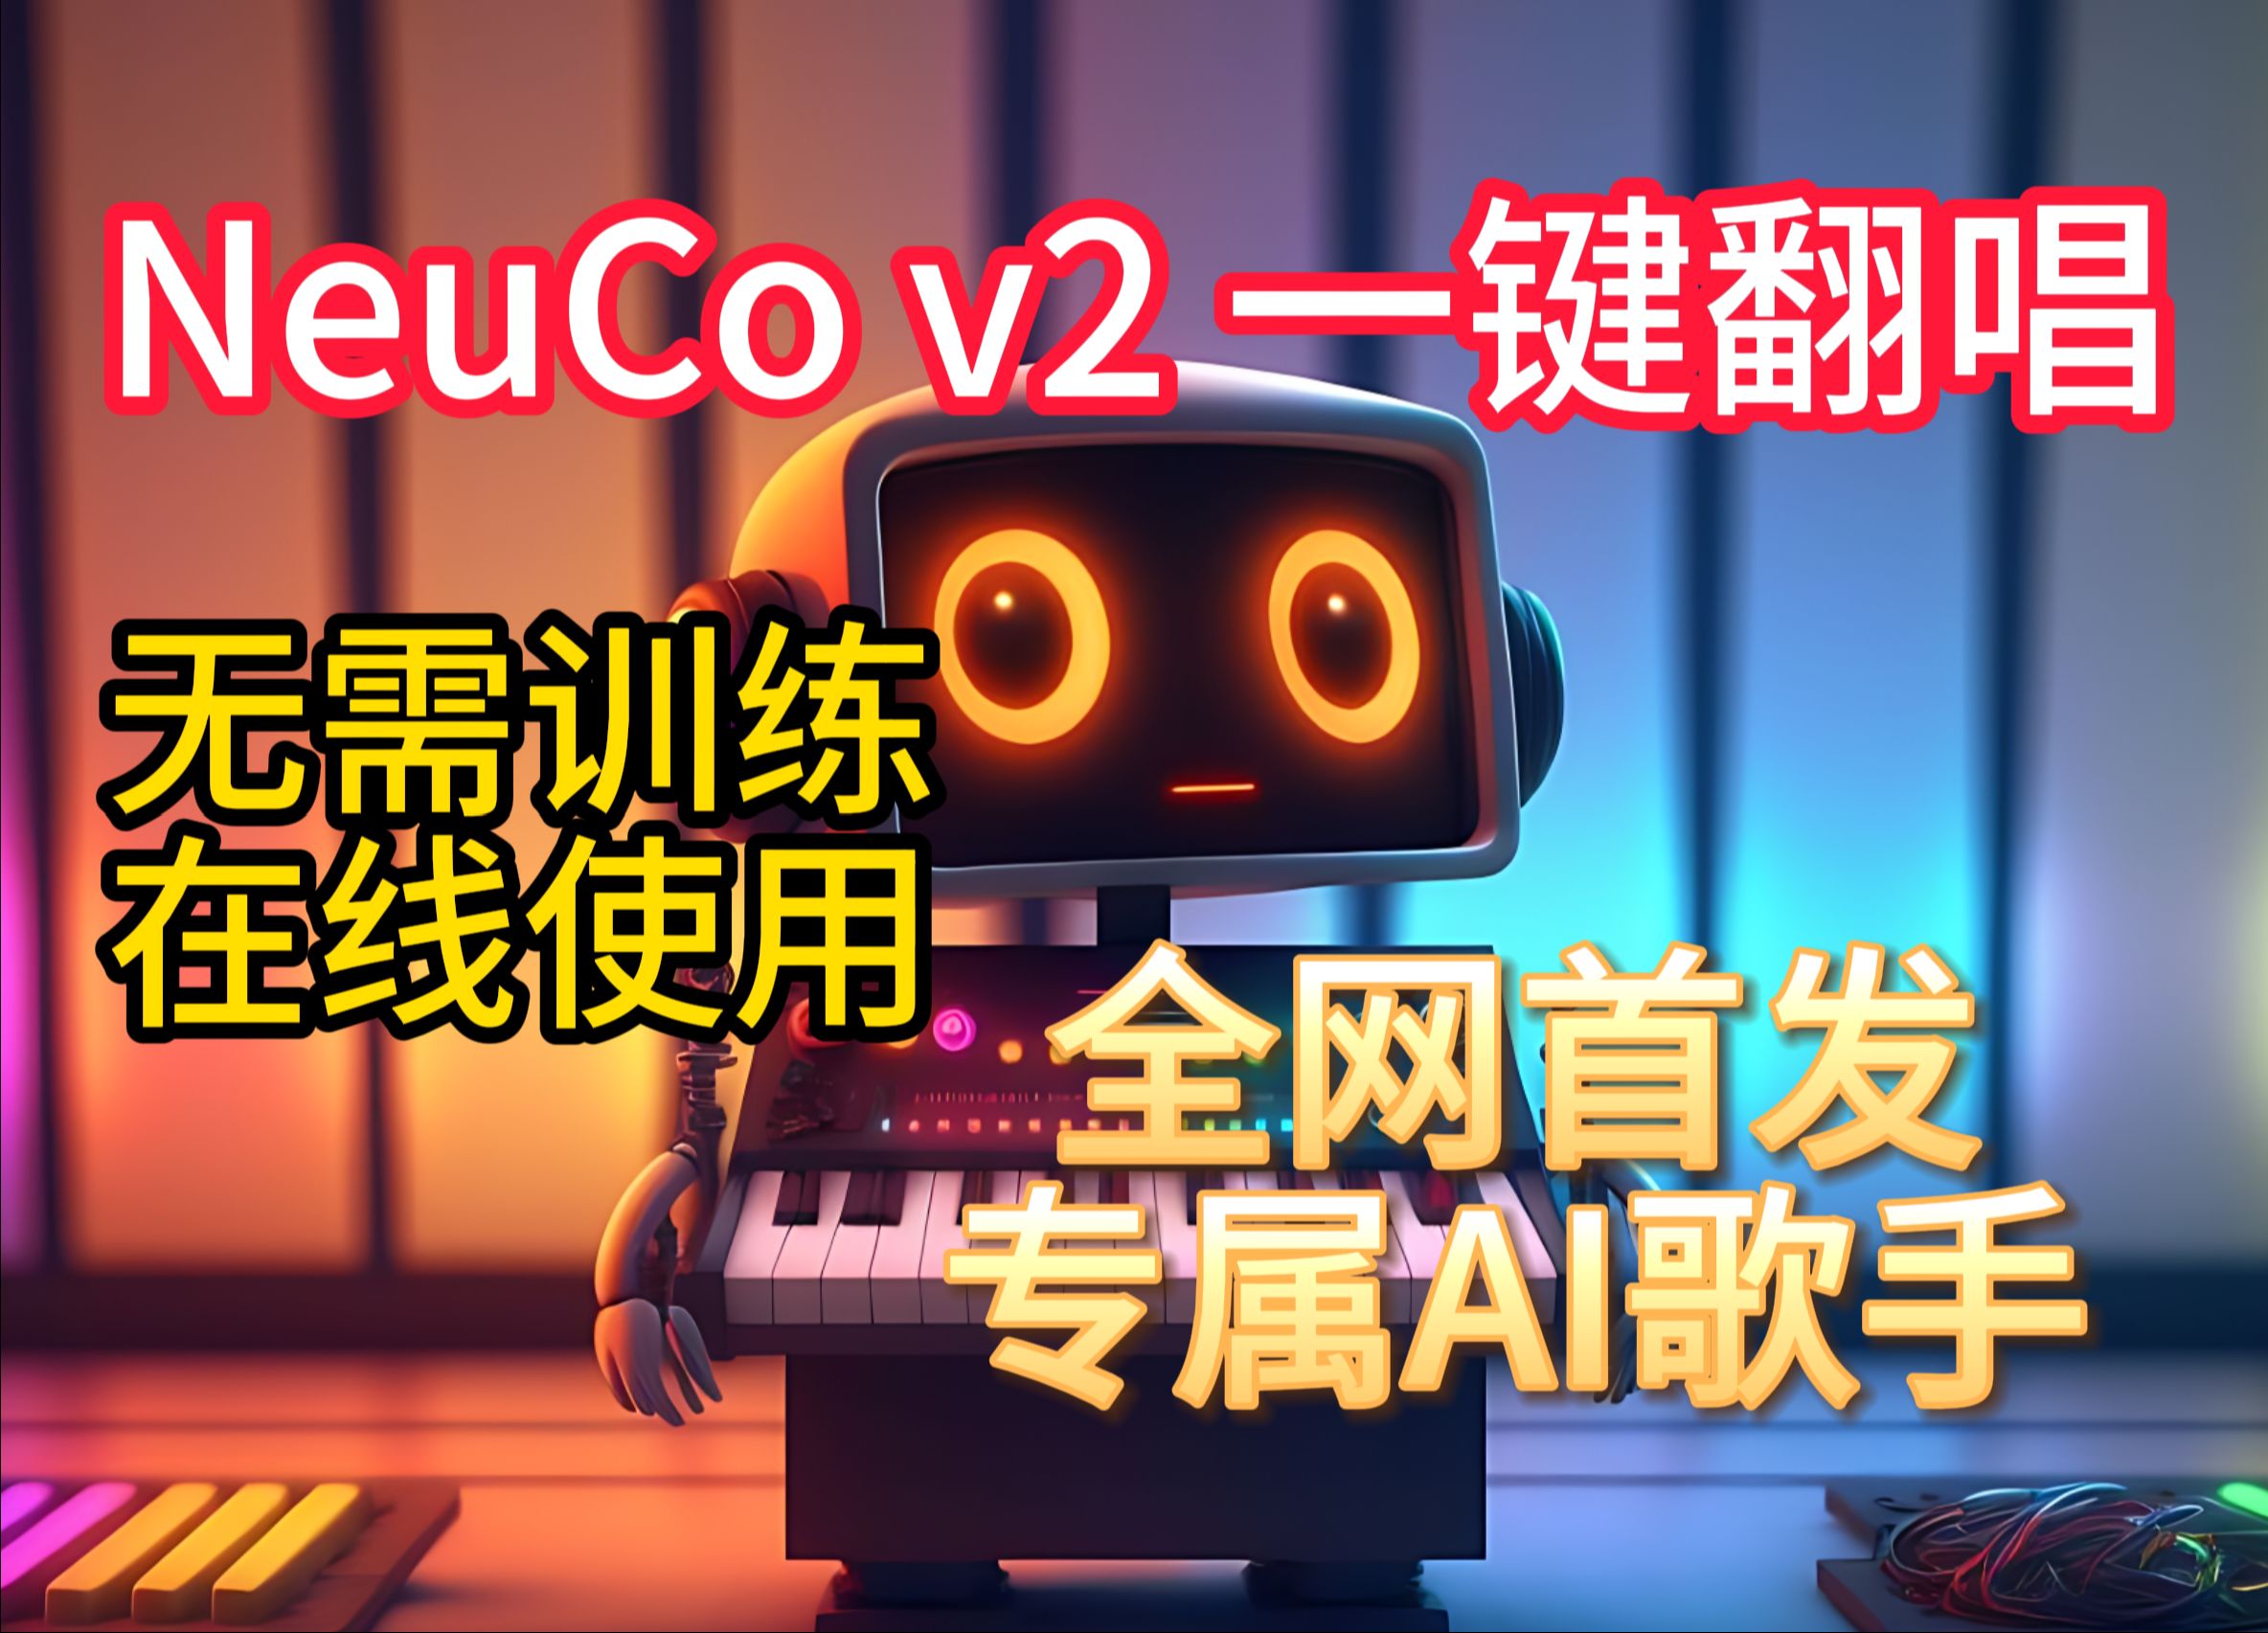 NeuCo v2声音克隆首发，一键AI翻唱，无需训练！在线版SoVITS，在线使用，只需10秒音频的AI歌手！